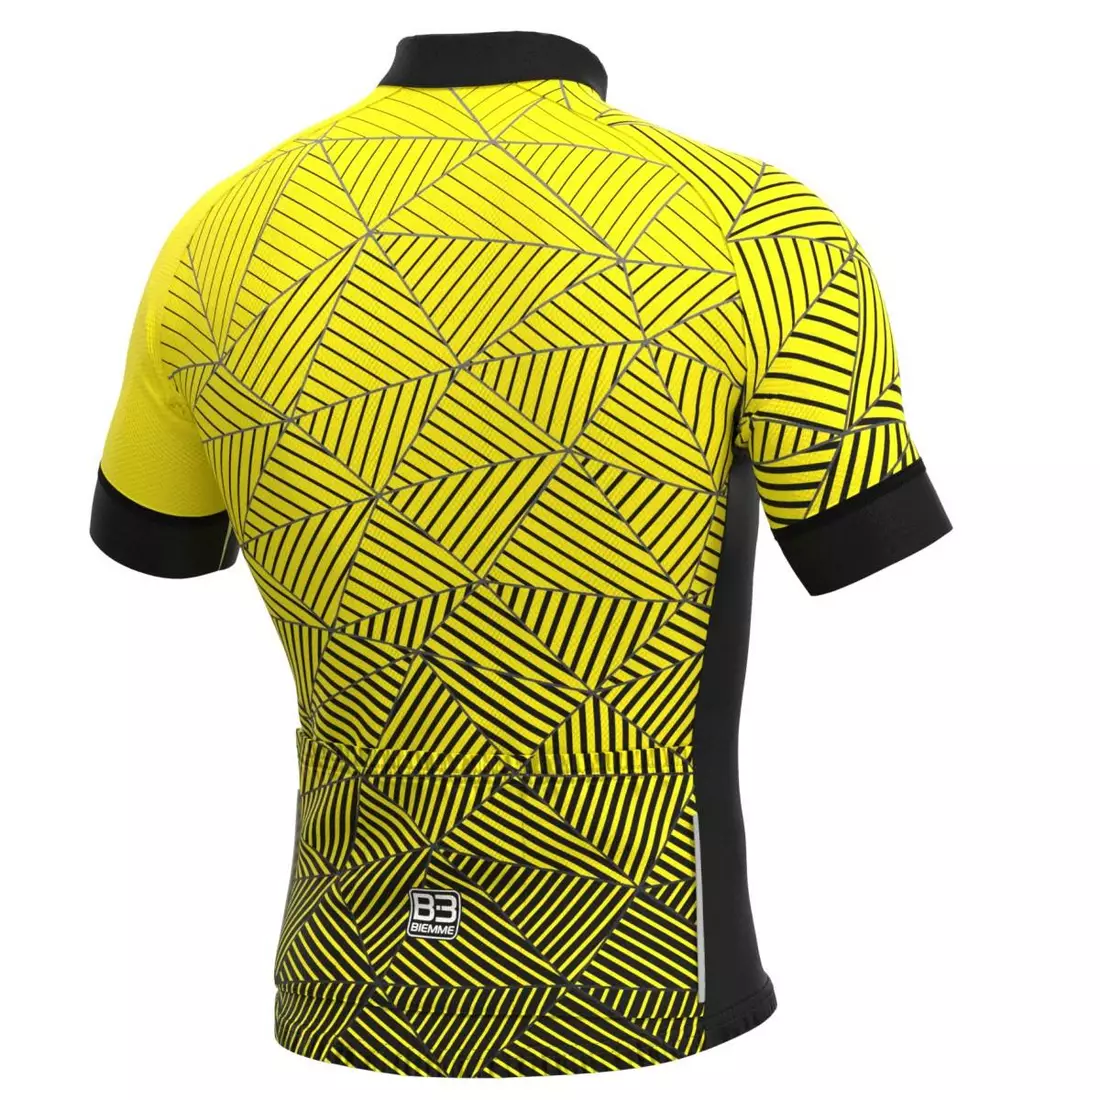 BIEMME men's cycling jersey ANGLIRU black yellow